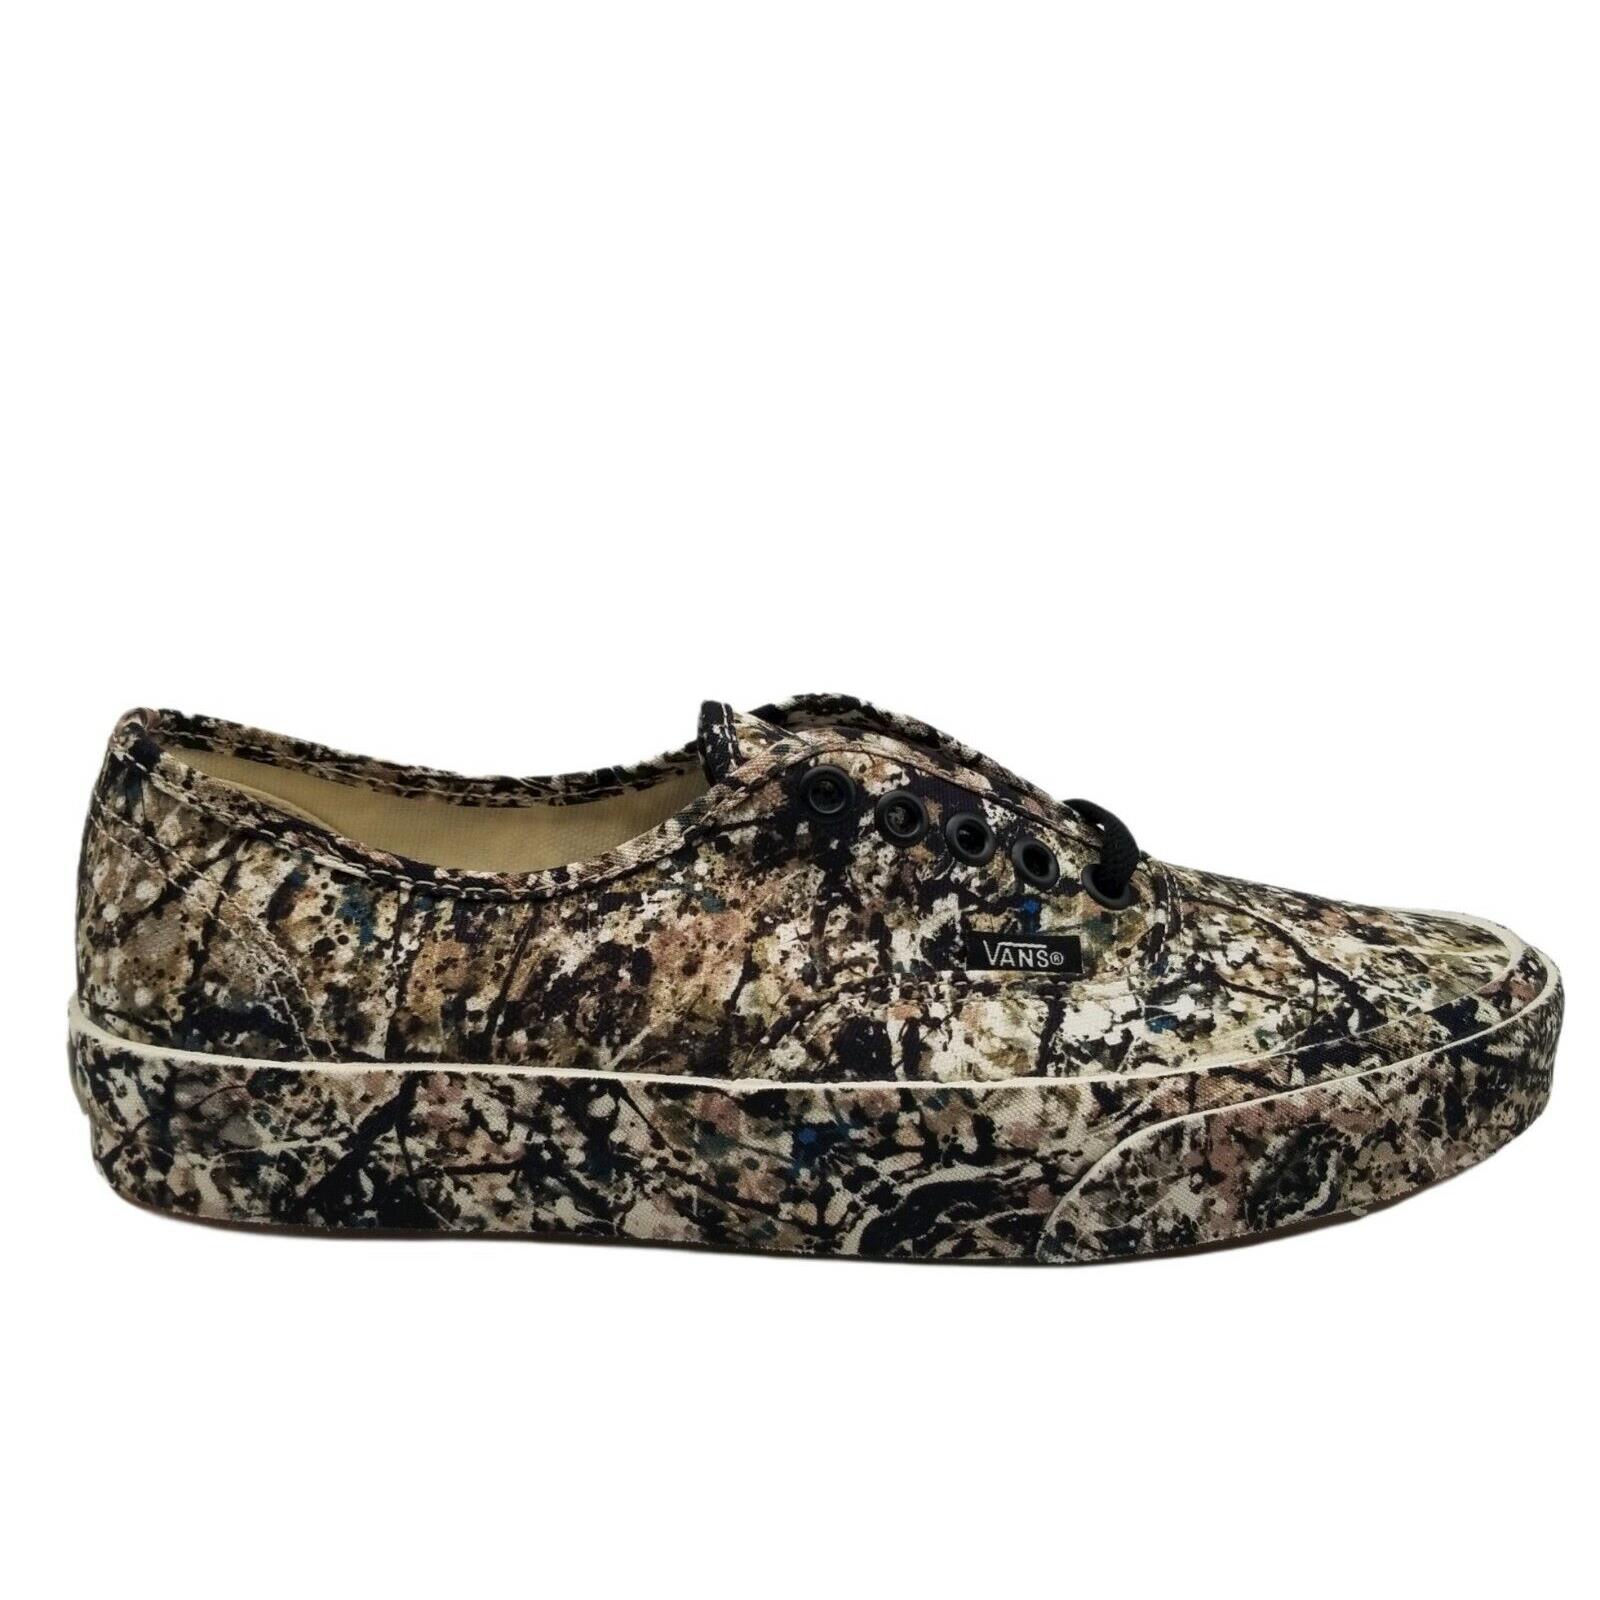 Vans Moma Jackson Pollock Men Shoes Size 7.5